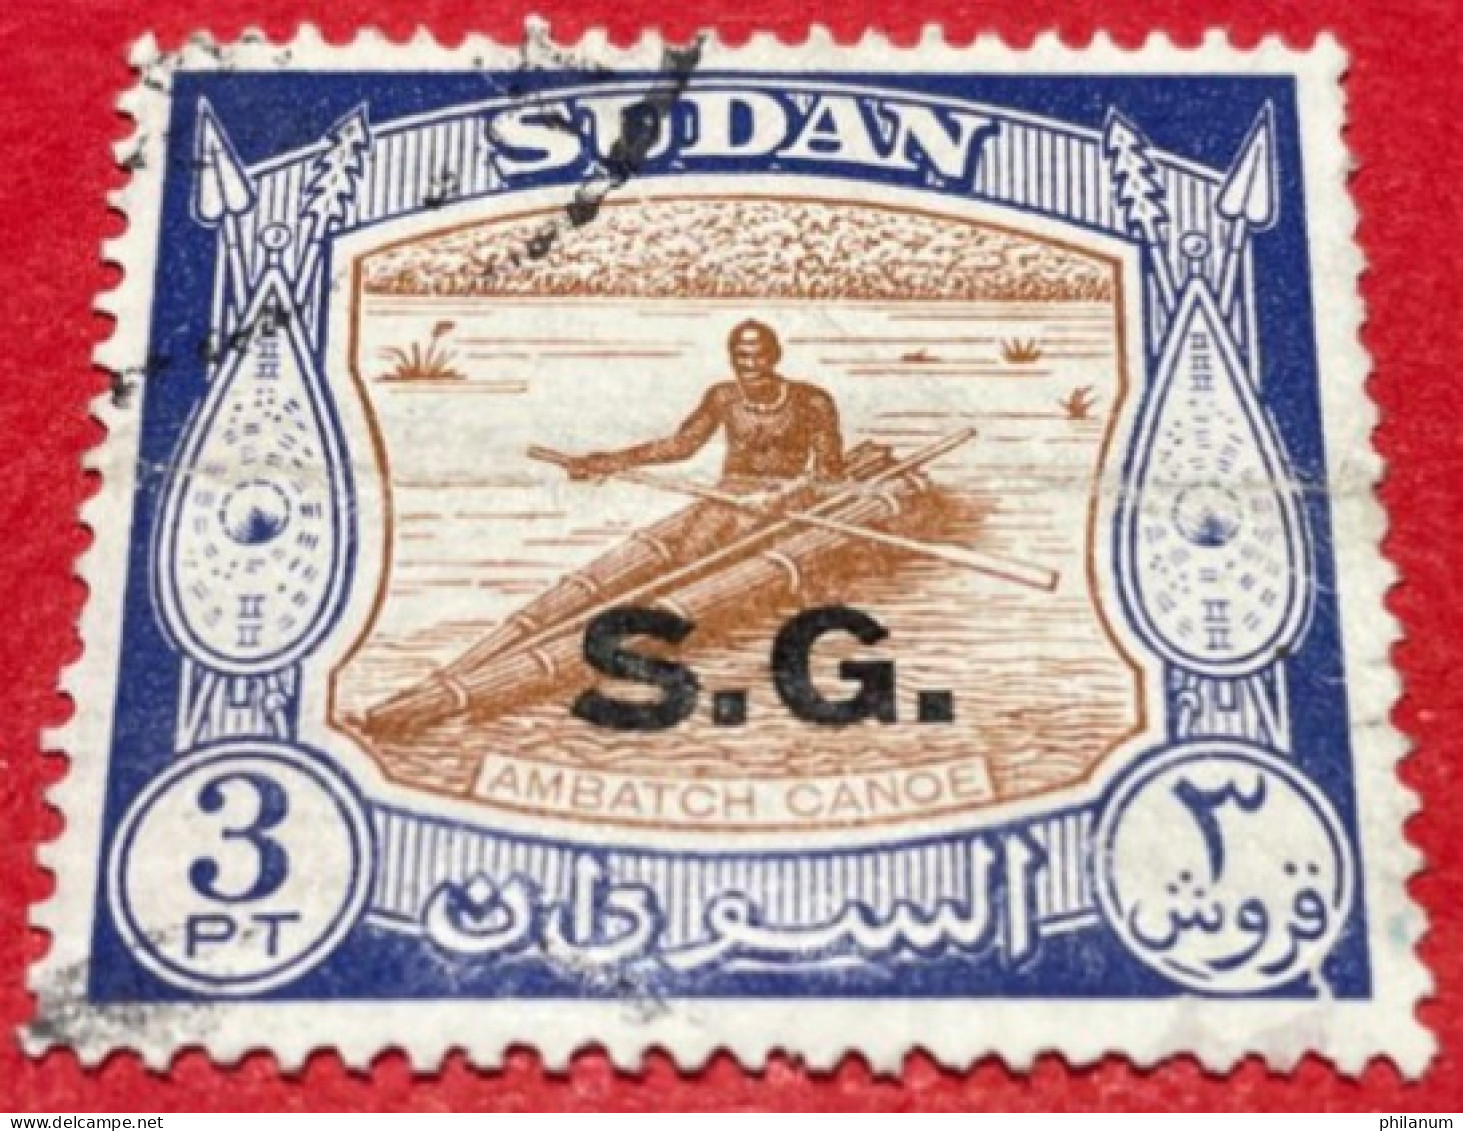 1951 SUDAN GOVERNMENT OVERPRINTED - AMBATCH CANOE - Südsudan